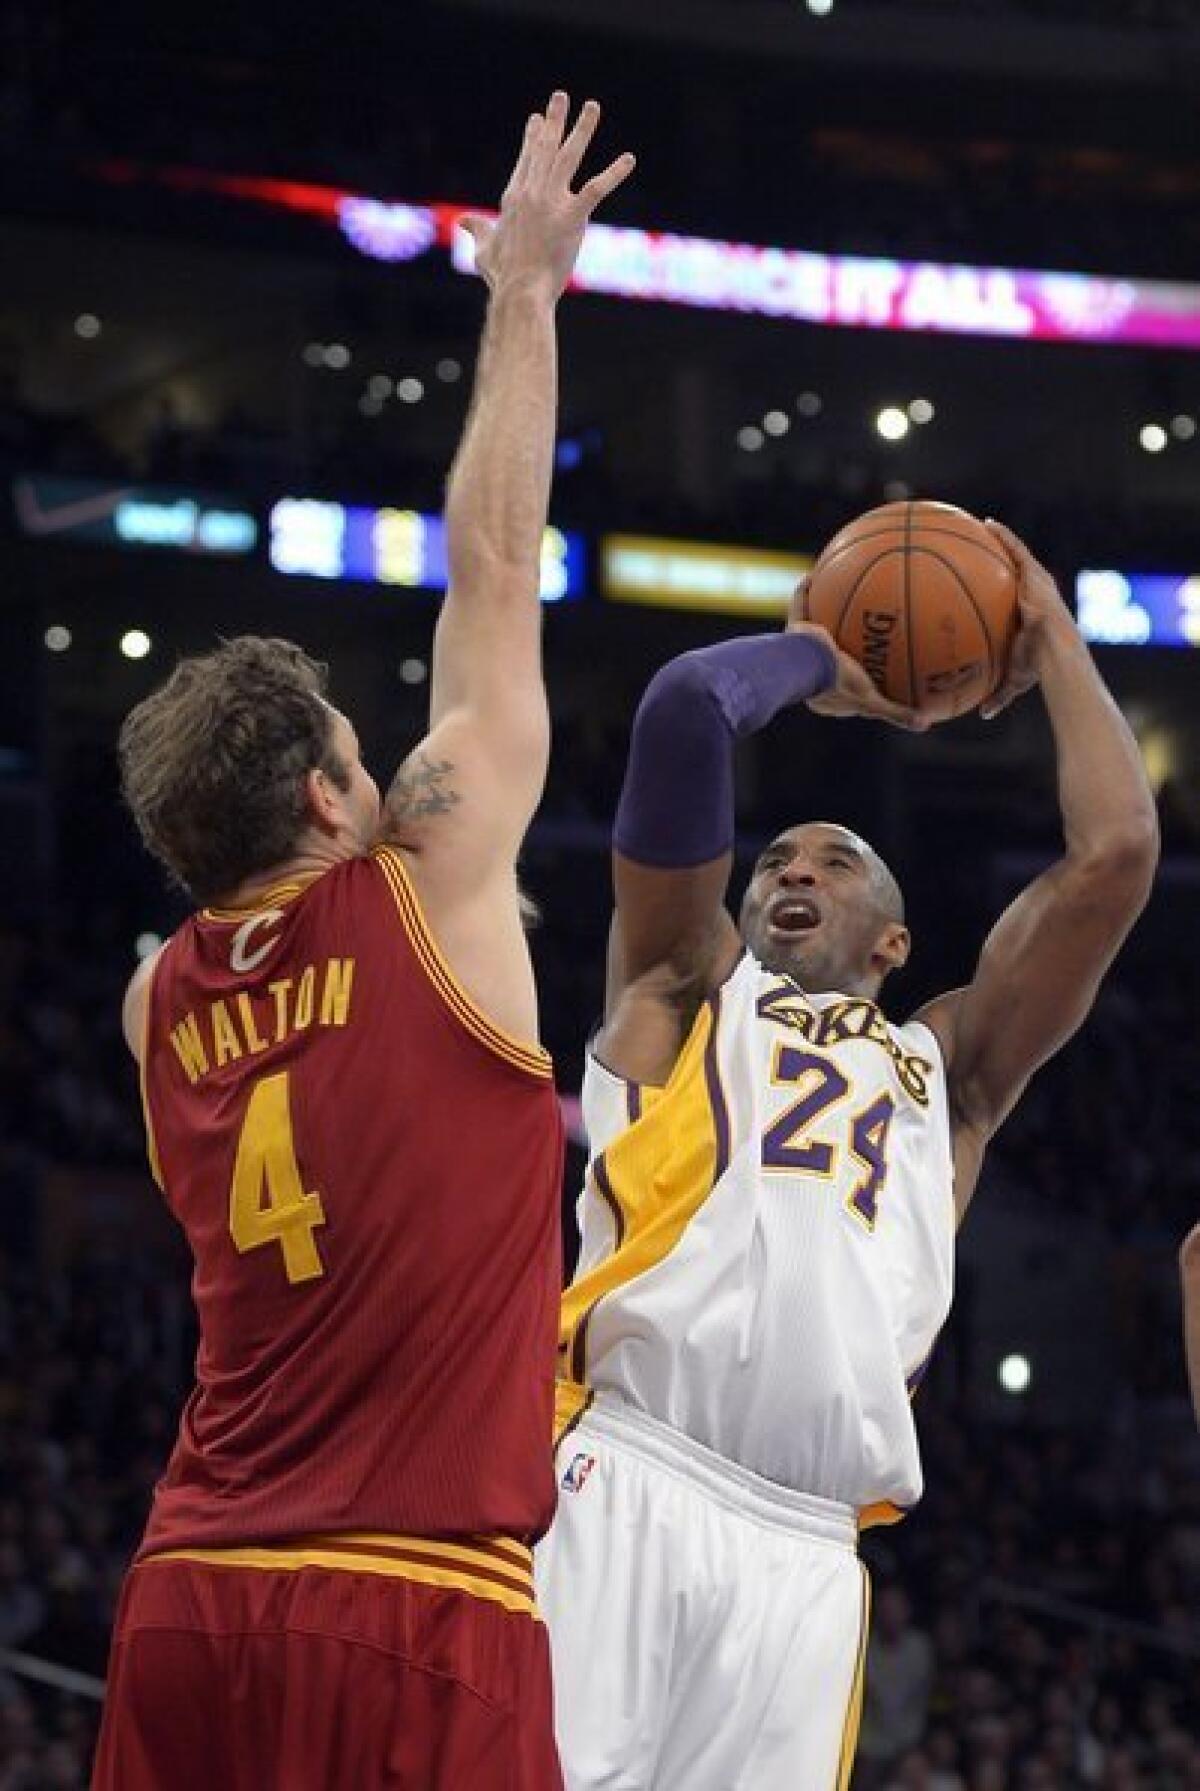 Lakers guard Kobe Bryant shoots over Cavaliers forward Luke Walton, his former L.A. teammate.